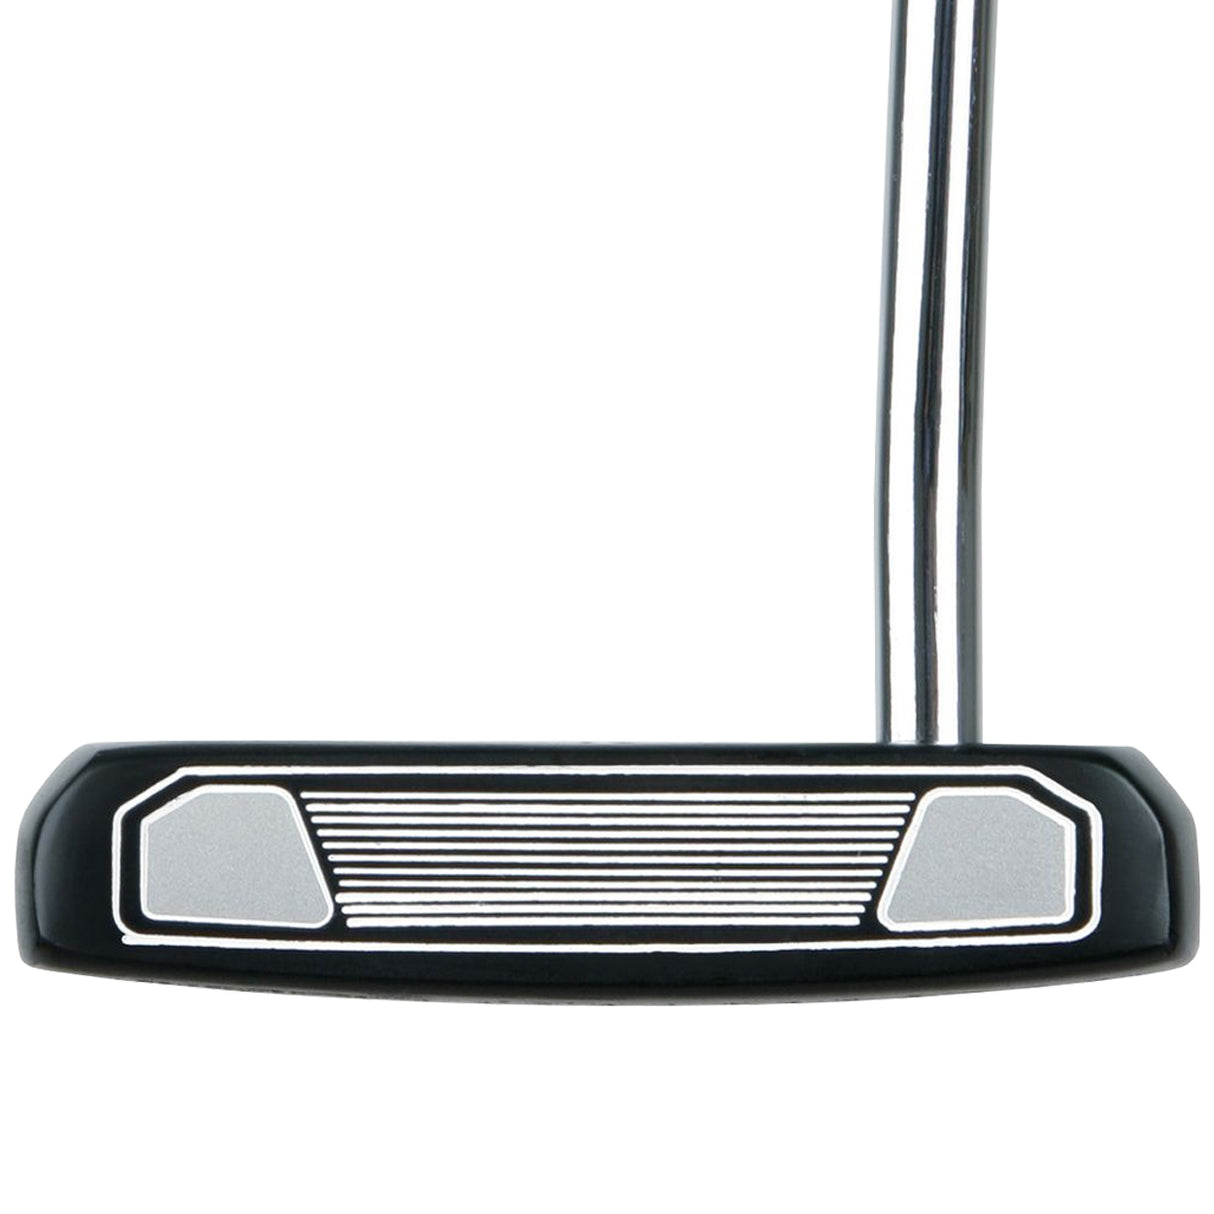 Orlimar Golf F60 2-Ball Style Mallet Putter (Black)